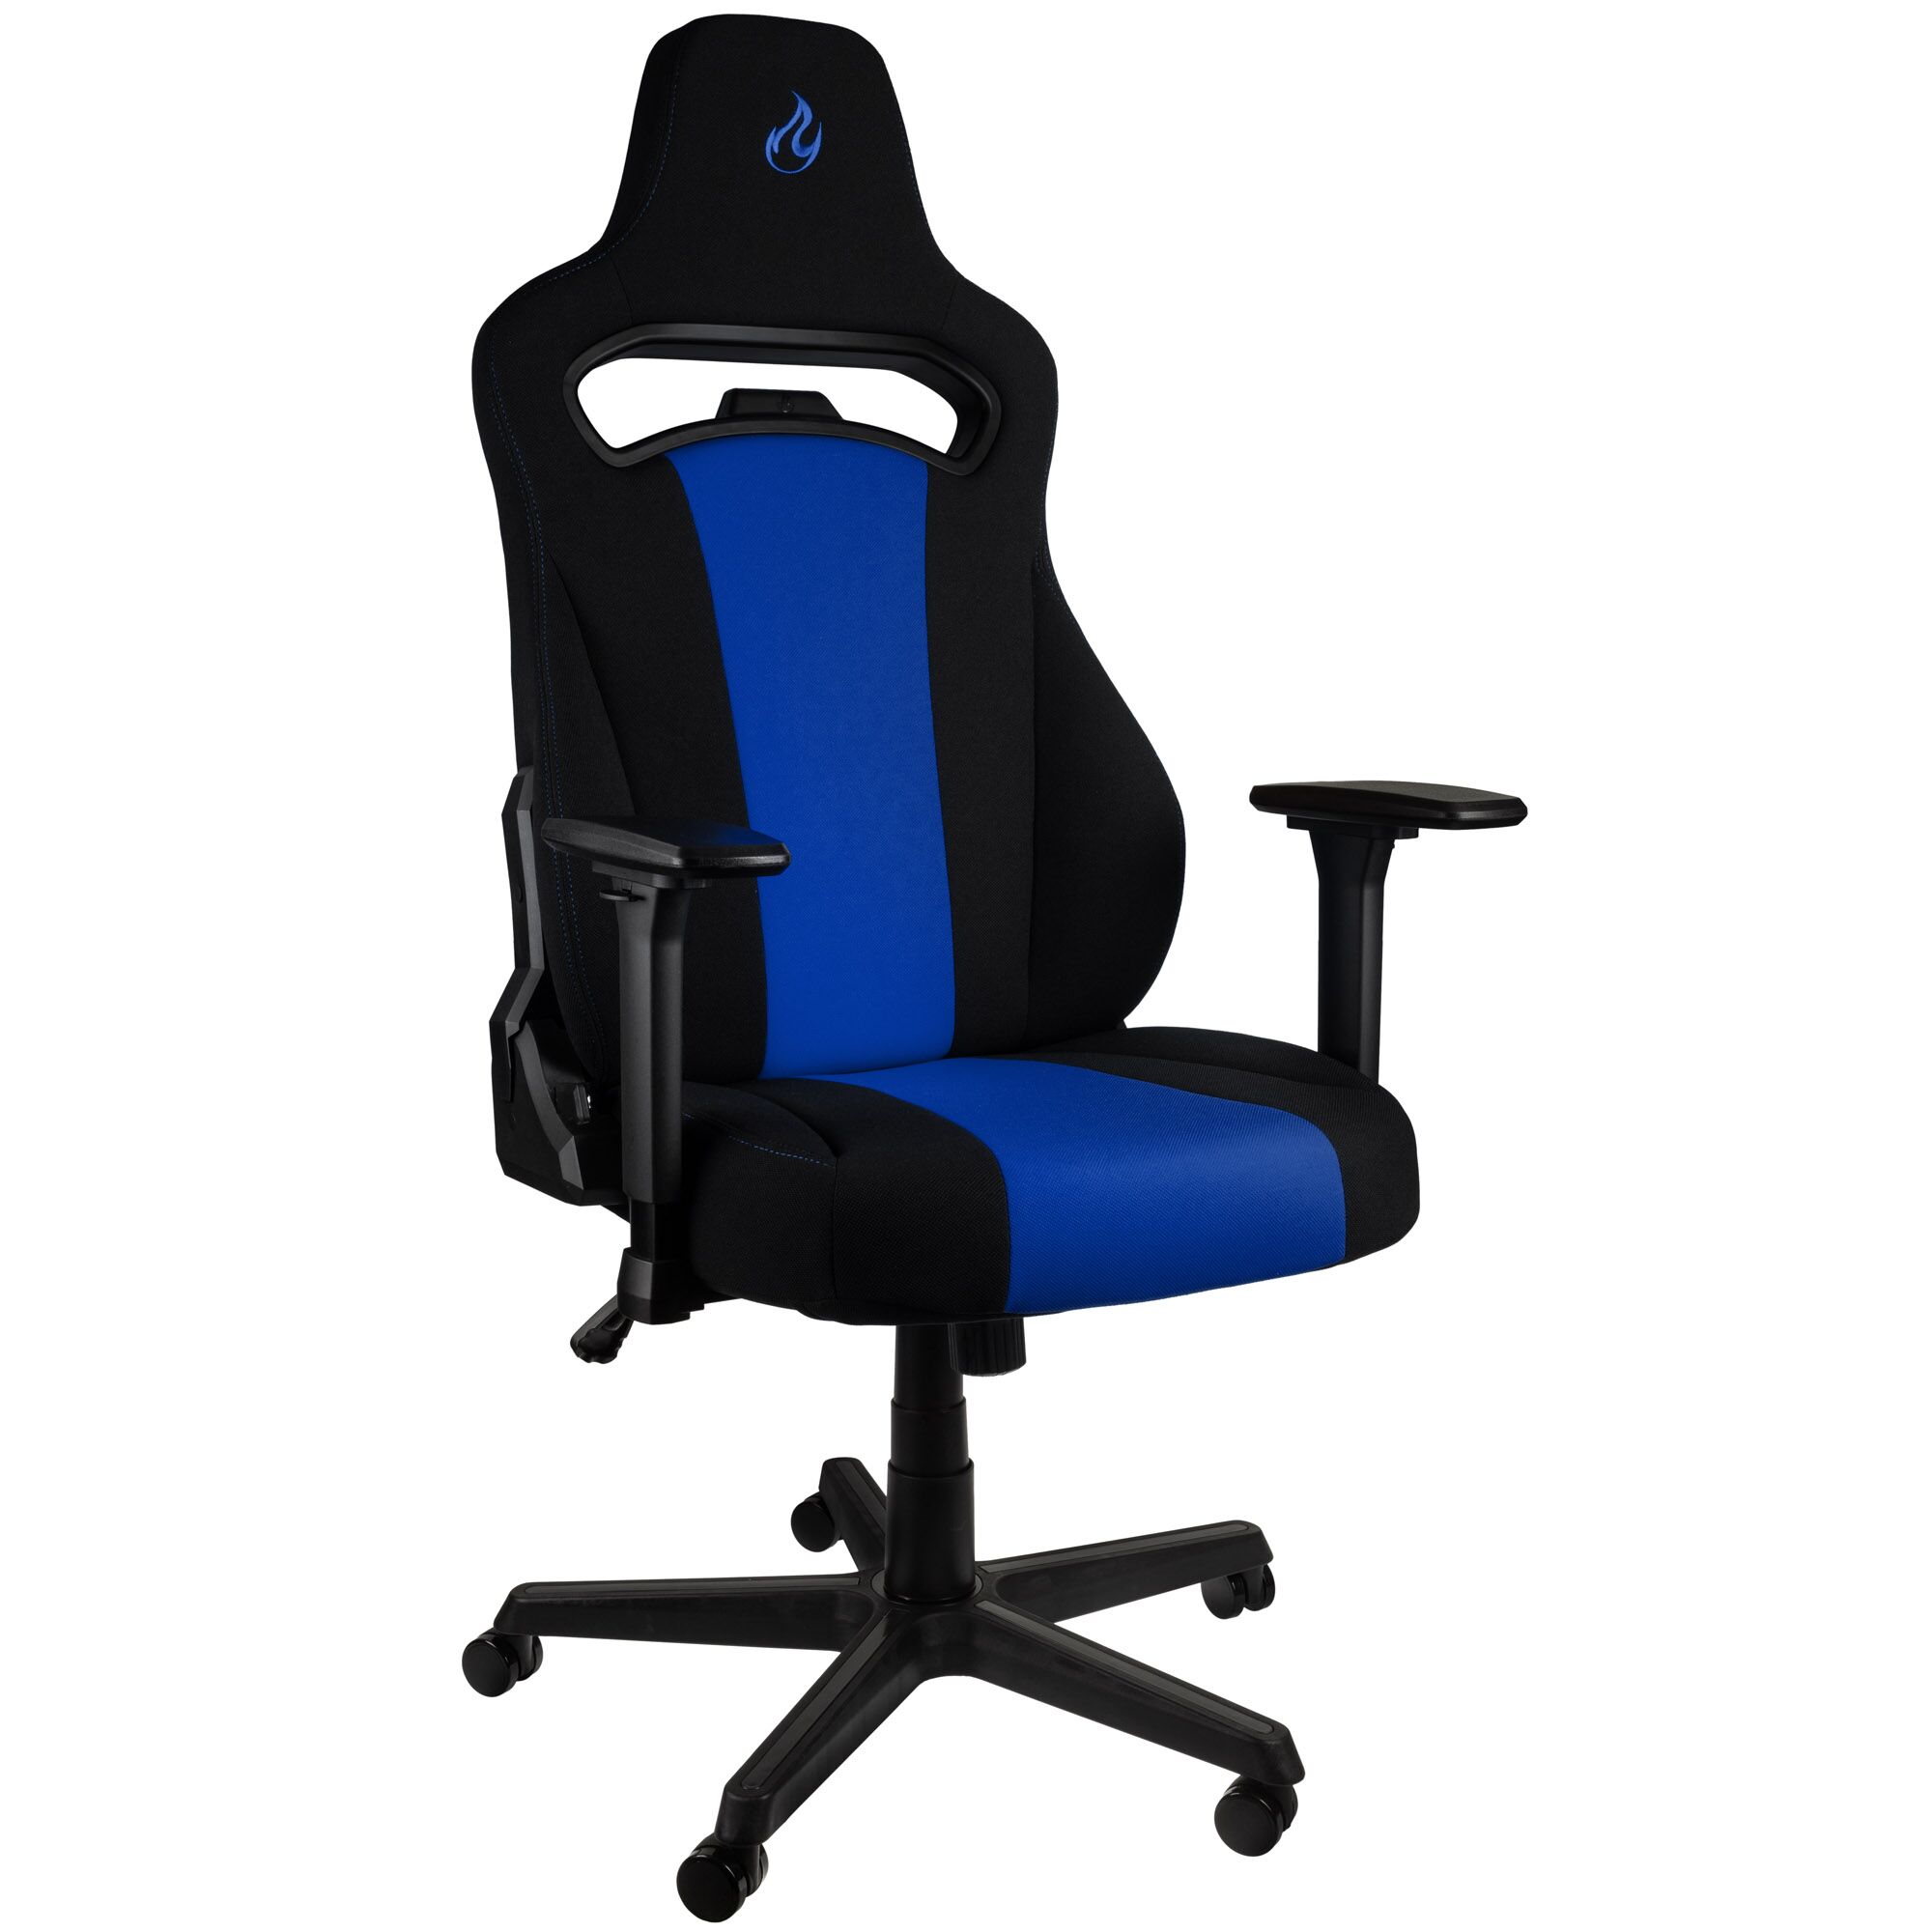 Nitro Concepts E250 Gaming Chair - black/blue